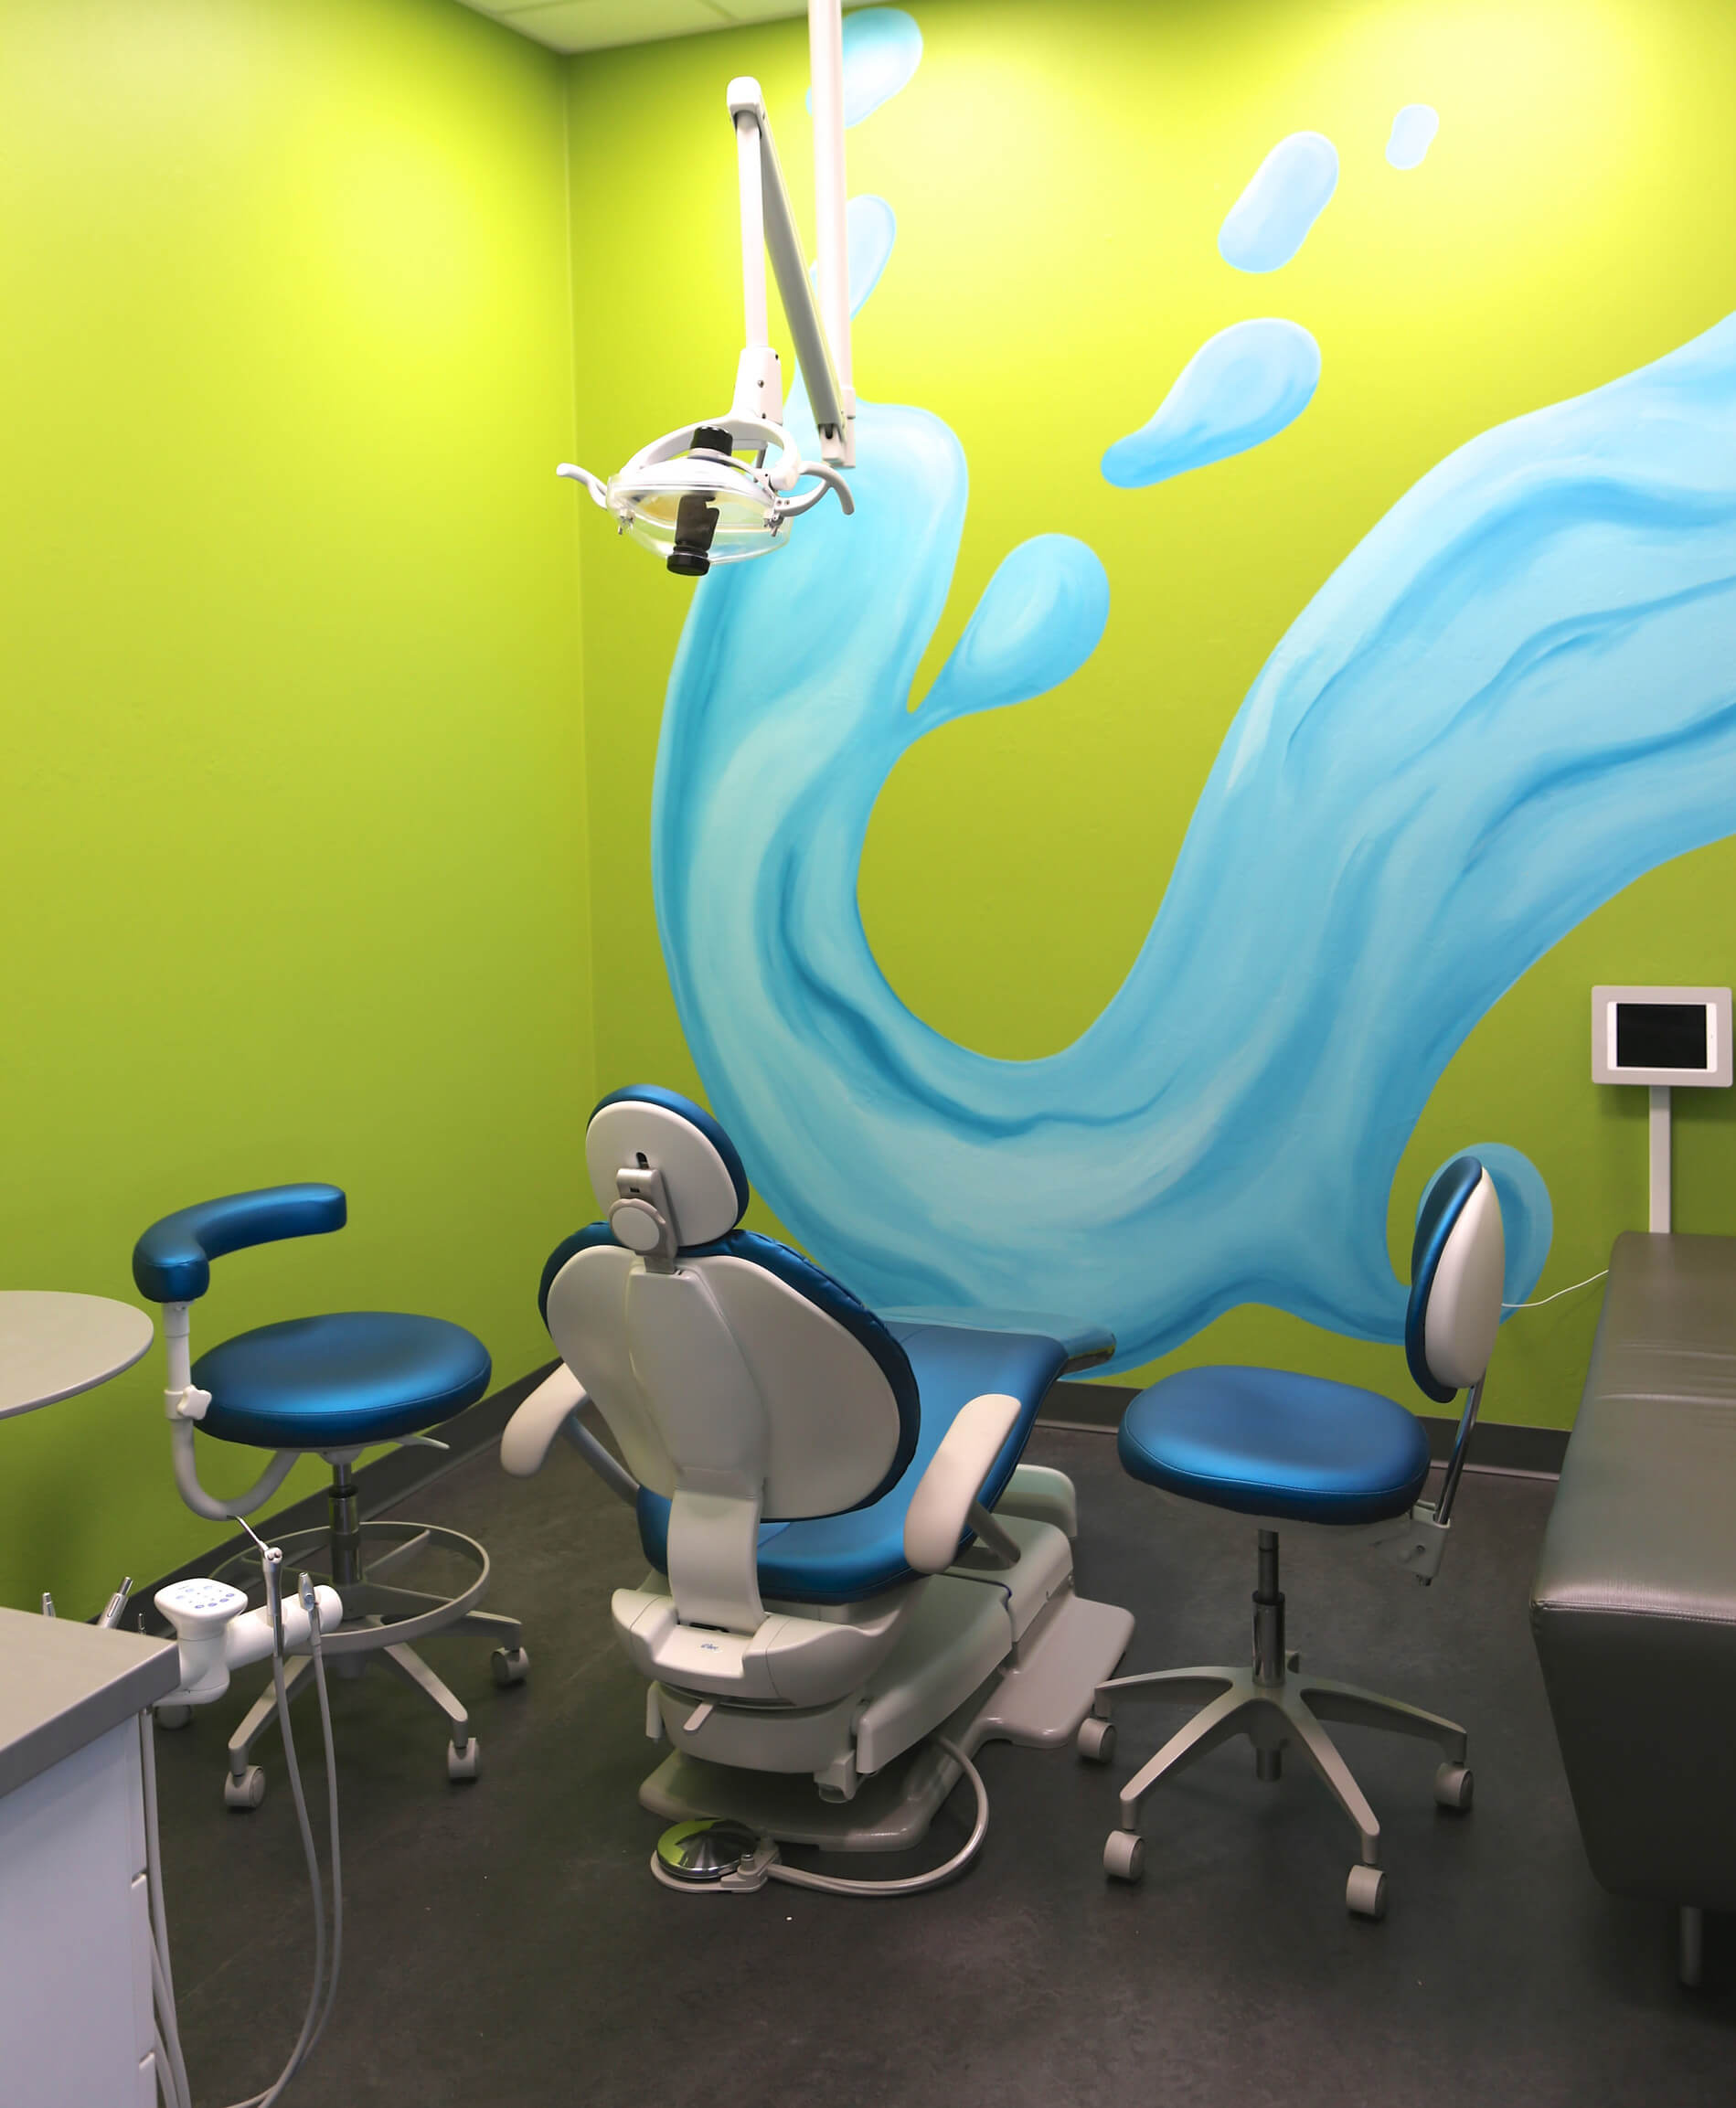 Private exam rooms for pediatric dentist patients